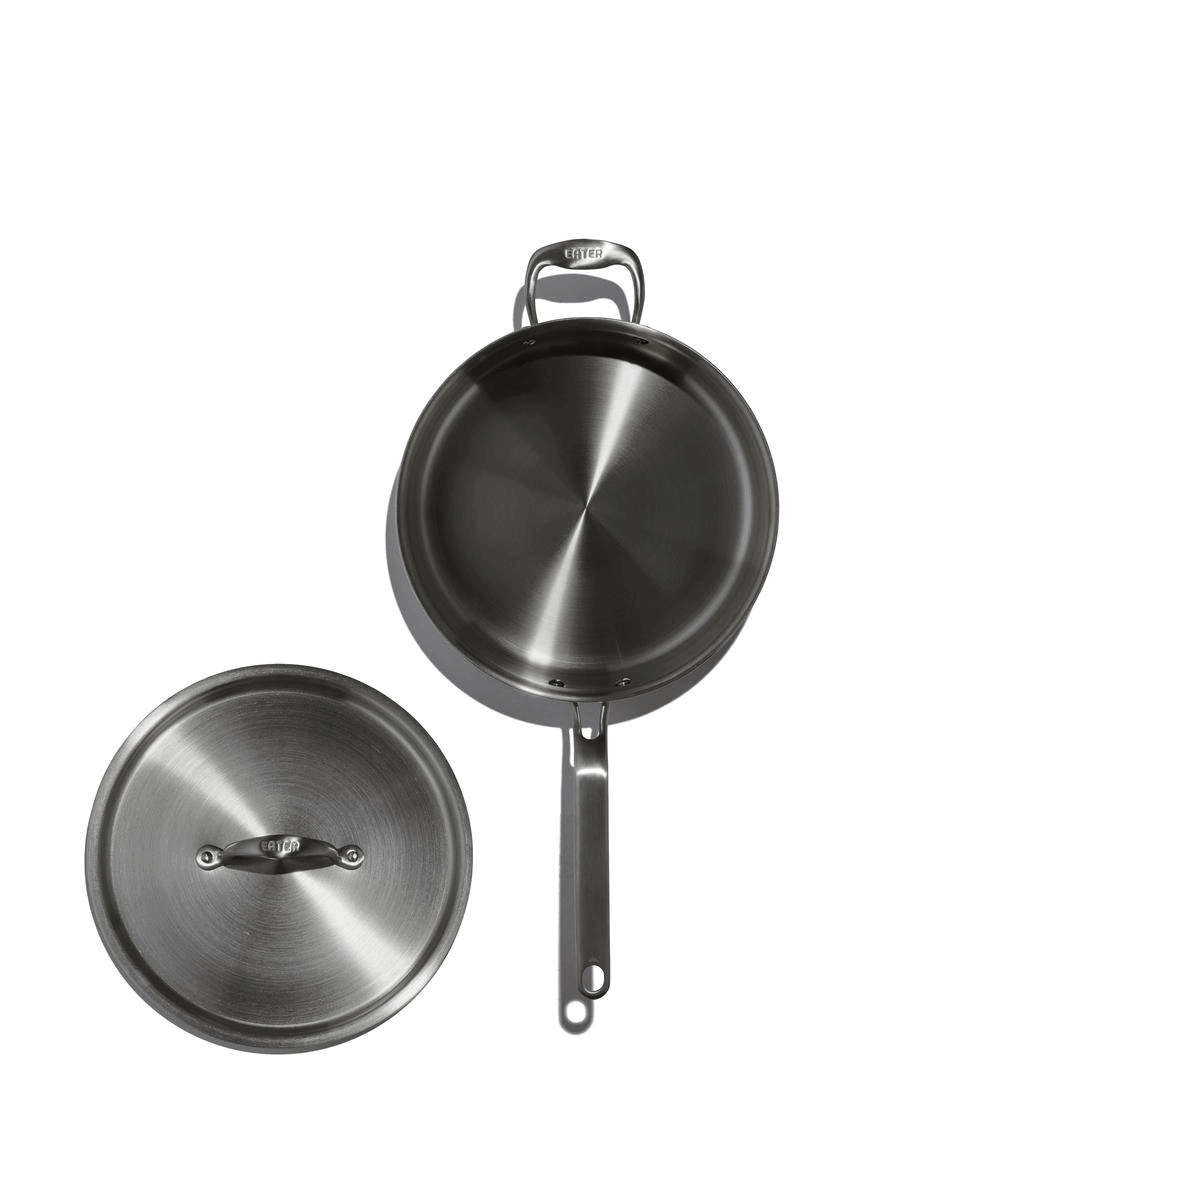 Sardel 4-Quart Saute Pan